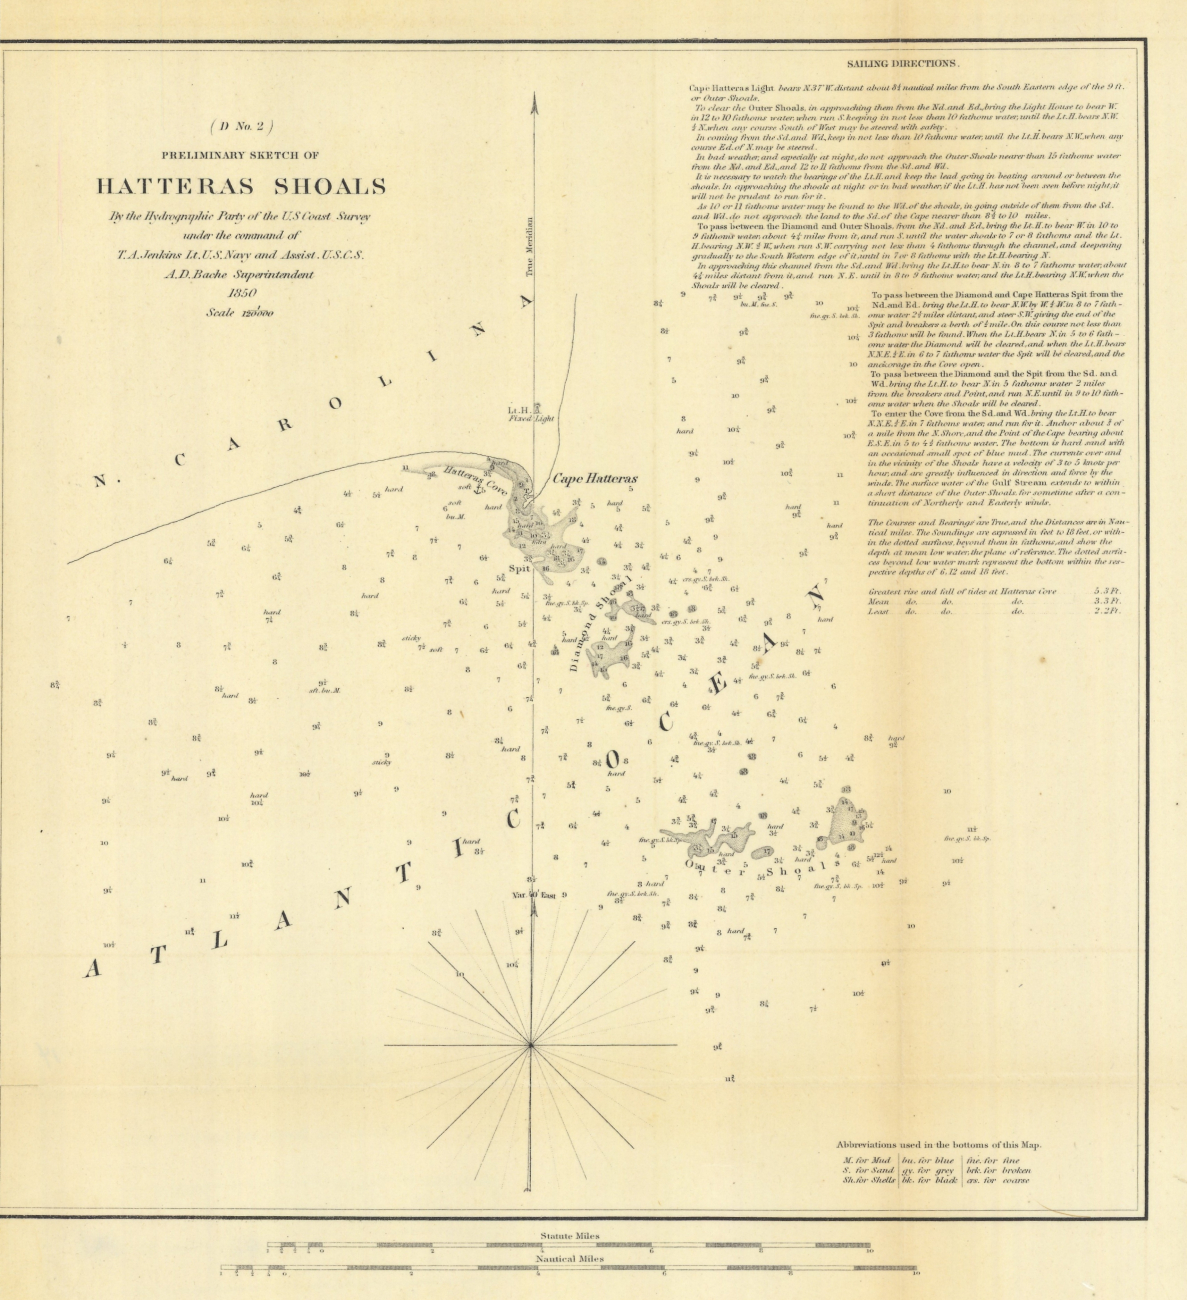 Annual Report 1850